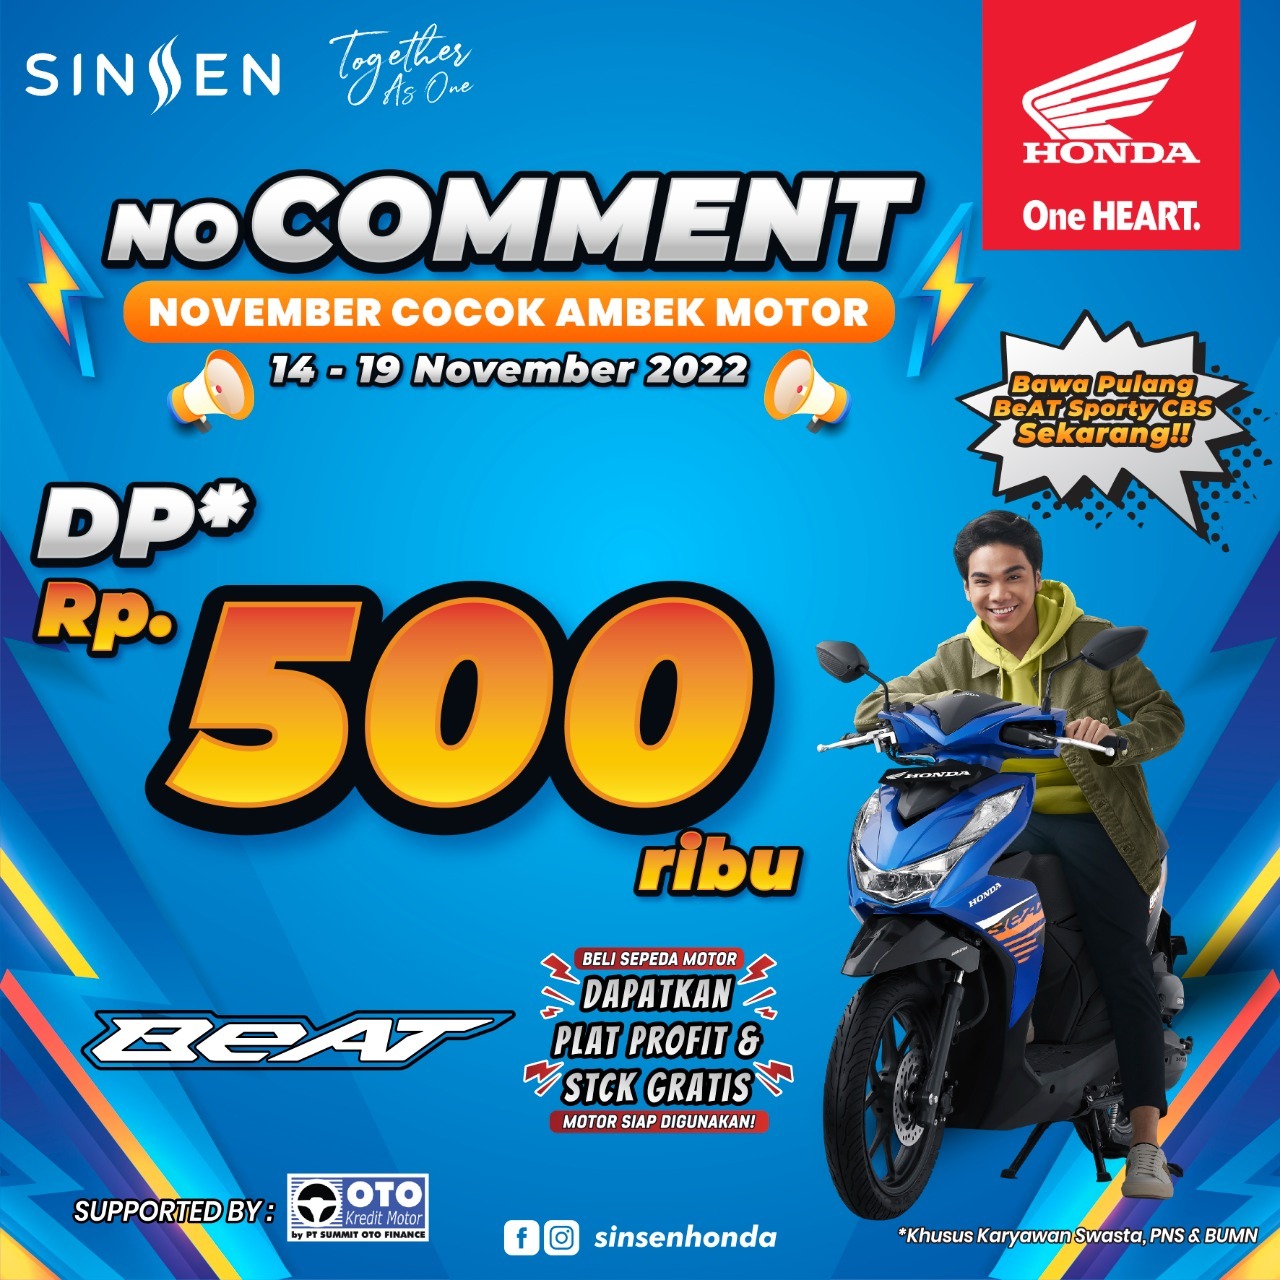 November Cocok Ambil Motor, Honda Sinsen Berikan Promo No Comment